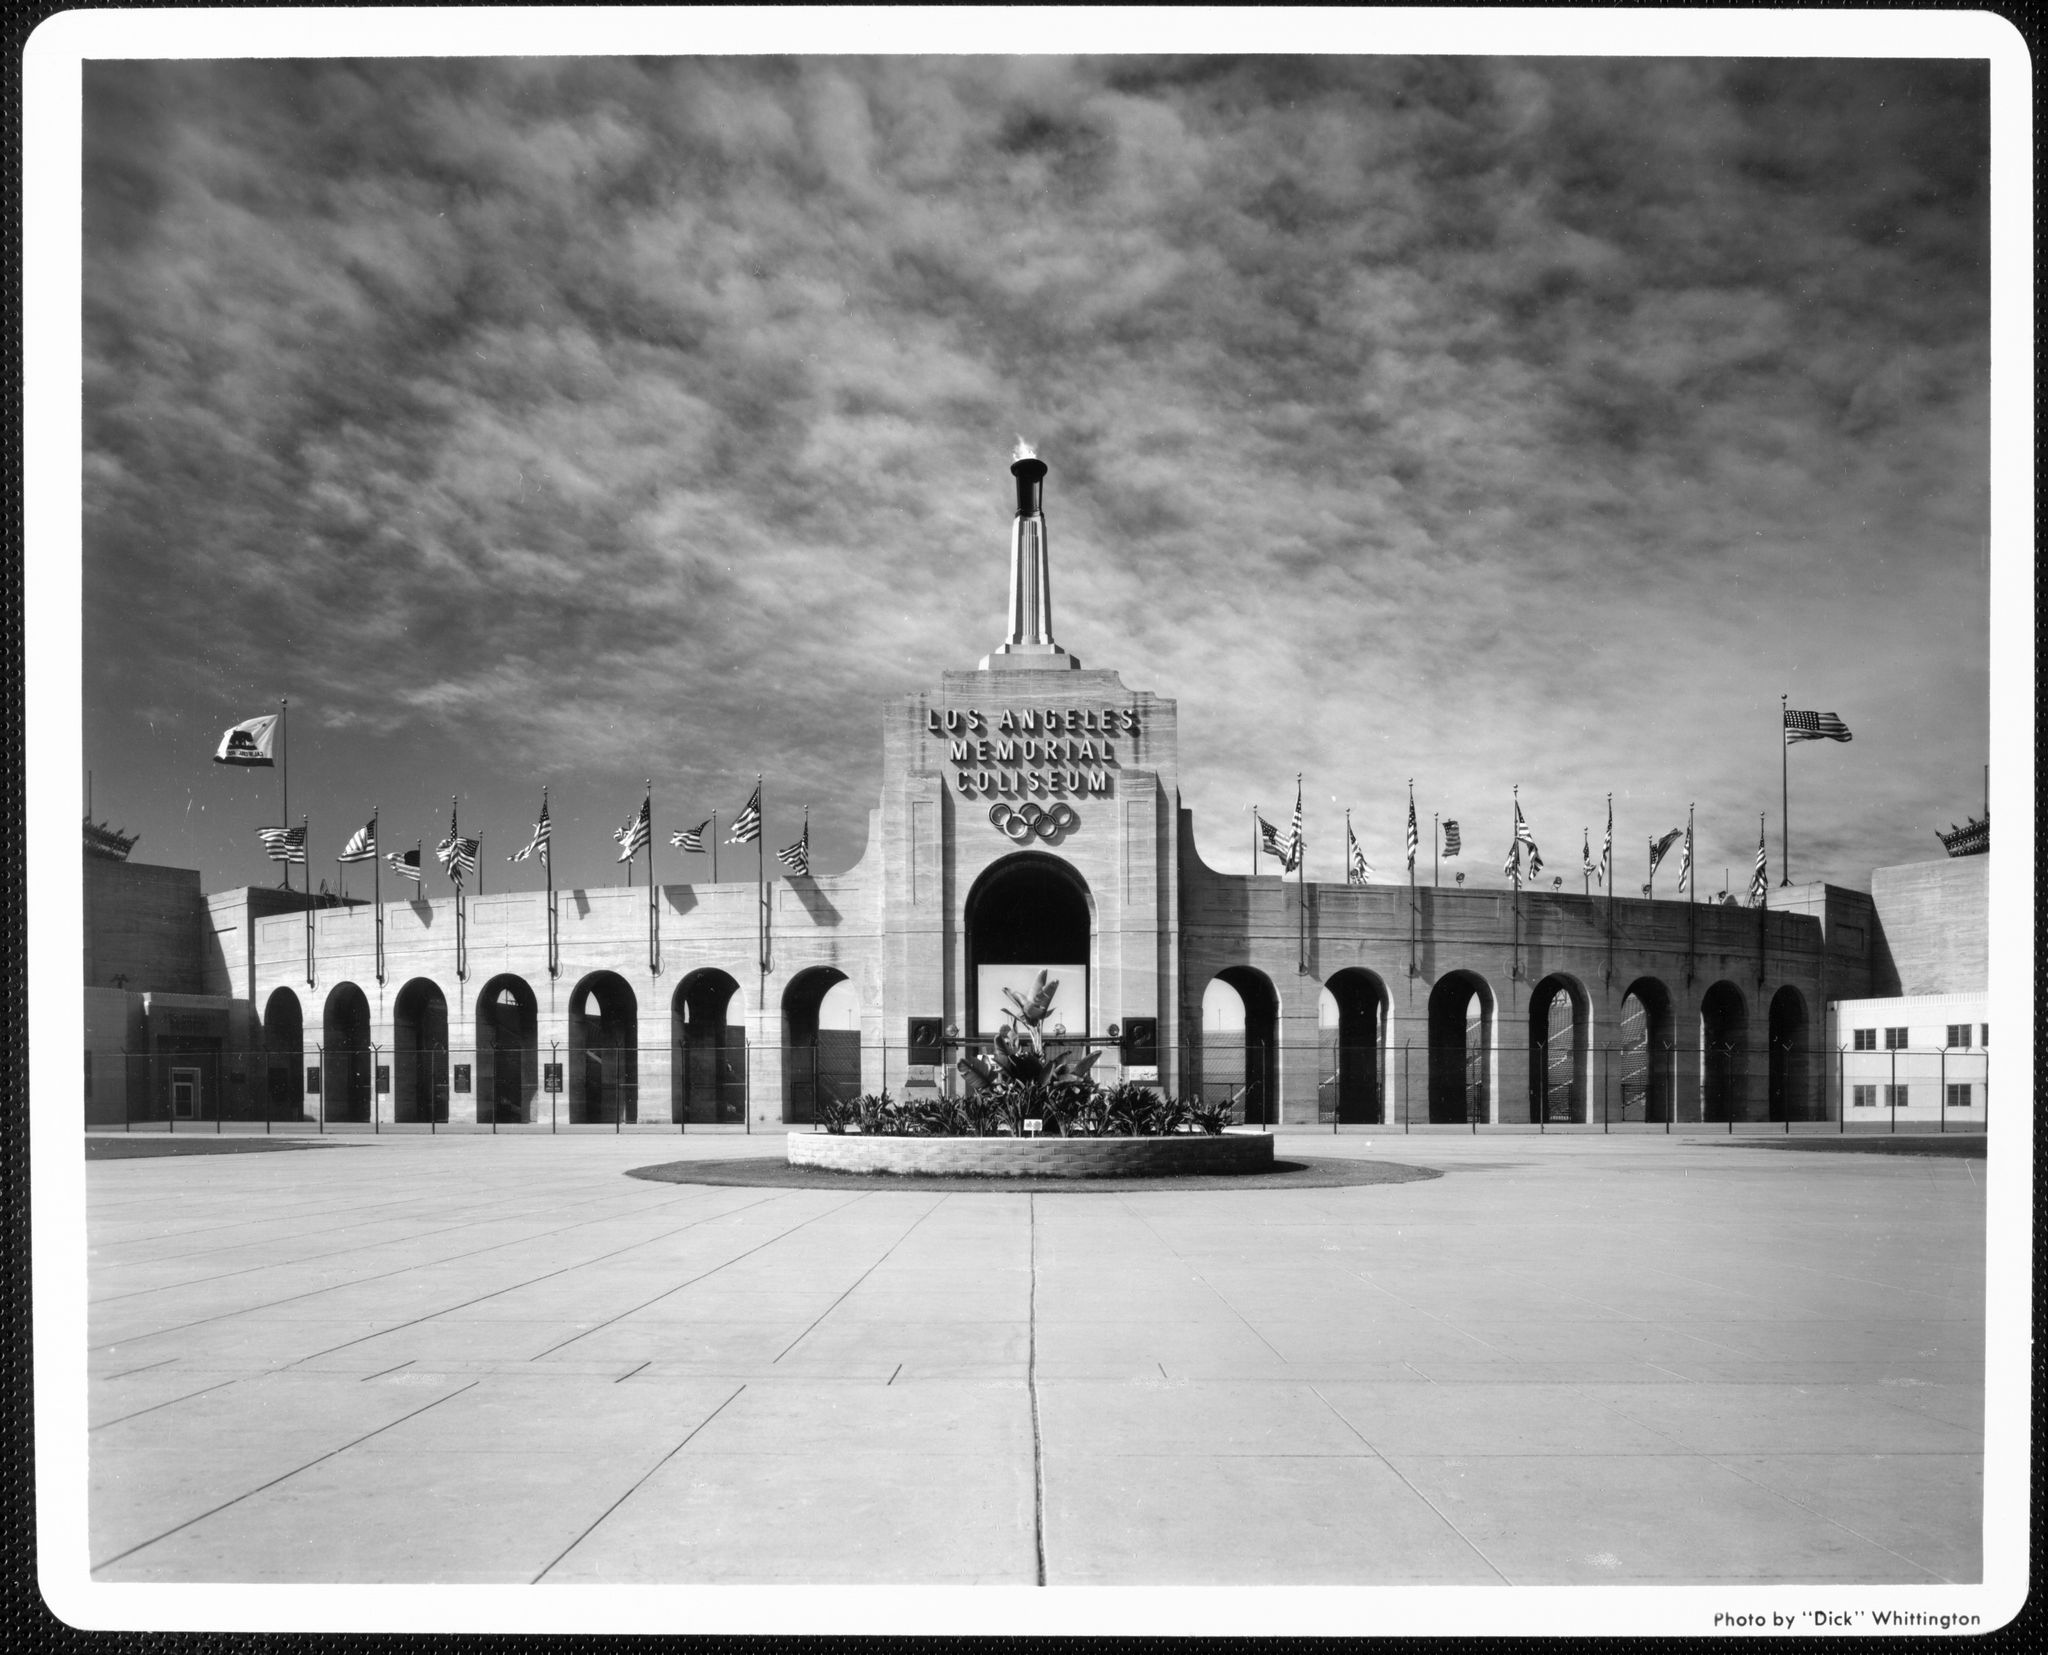 A facade of the entrance of the Los Angeles Memorial Coliseum